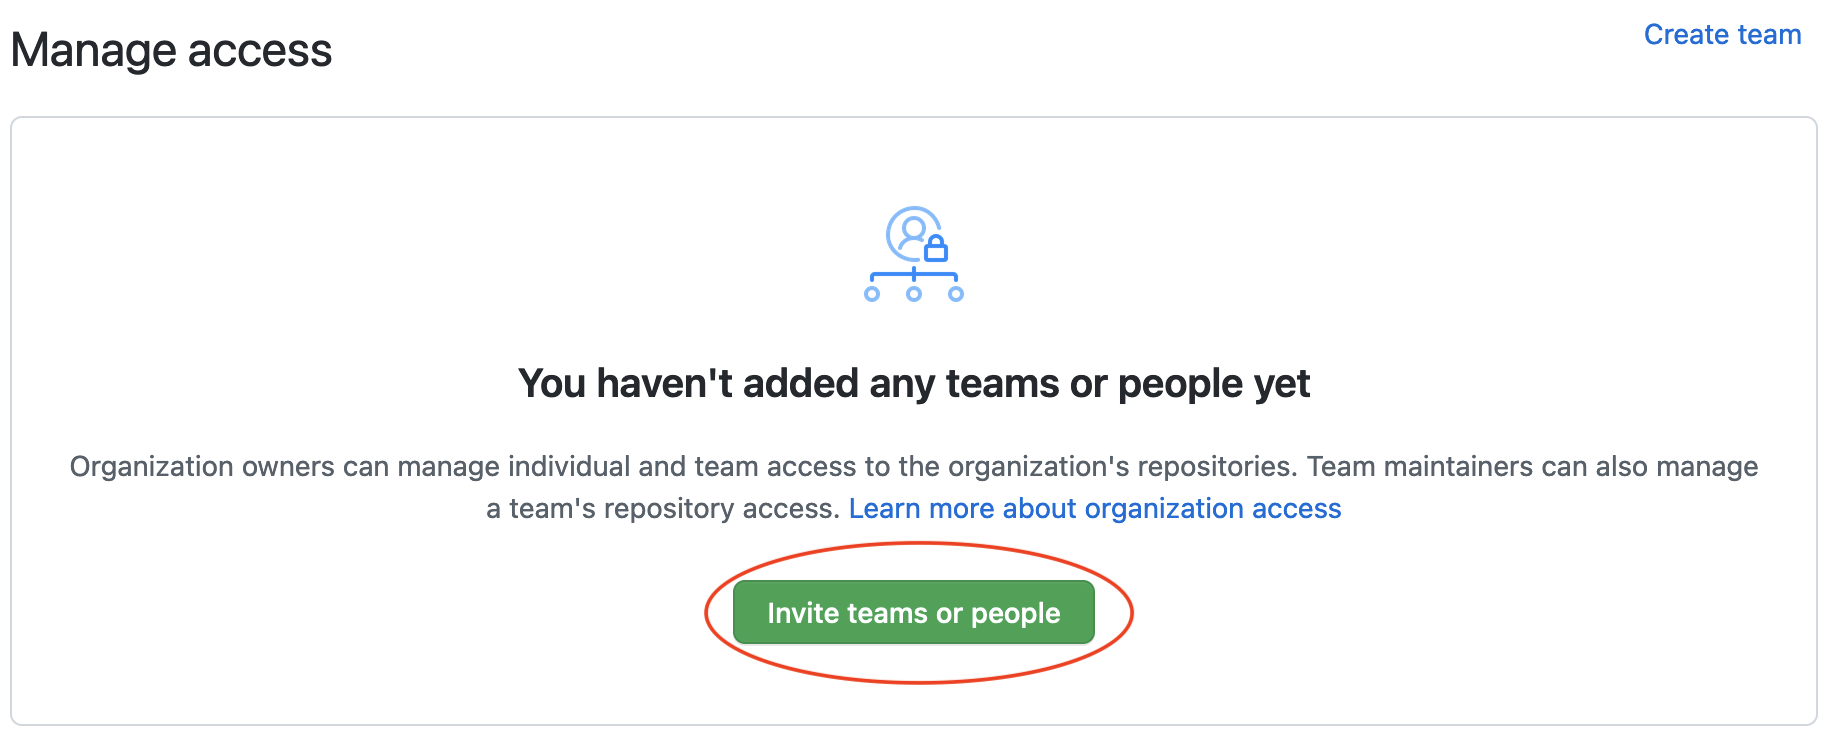 Invite teams or people